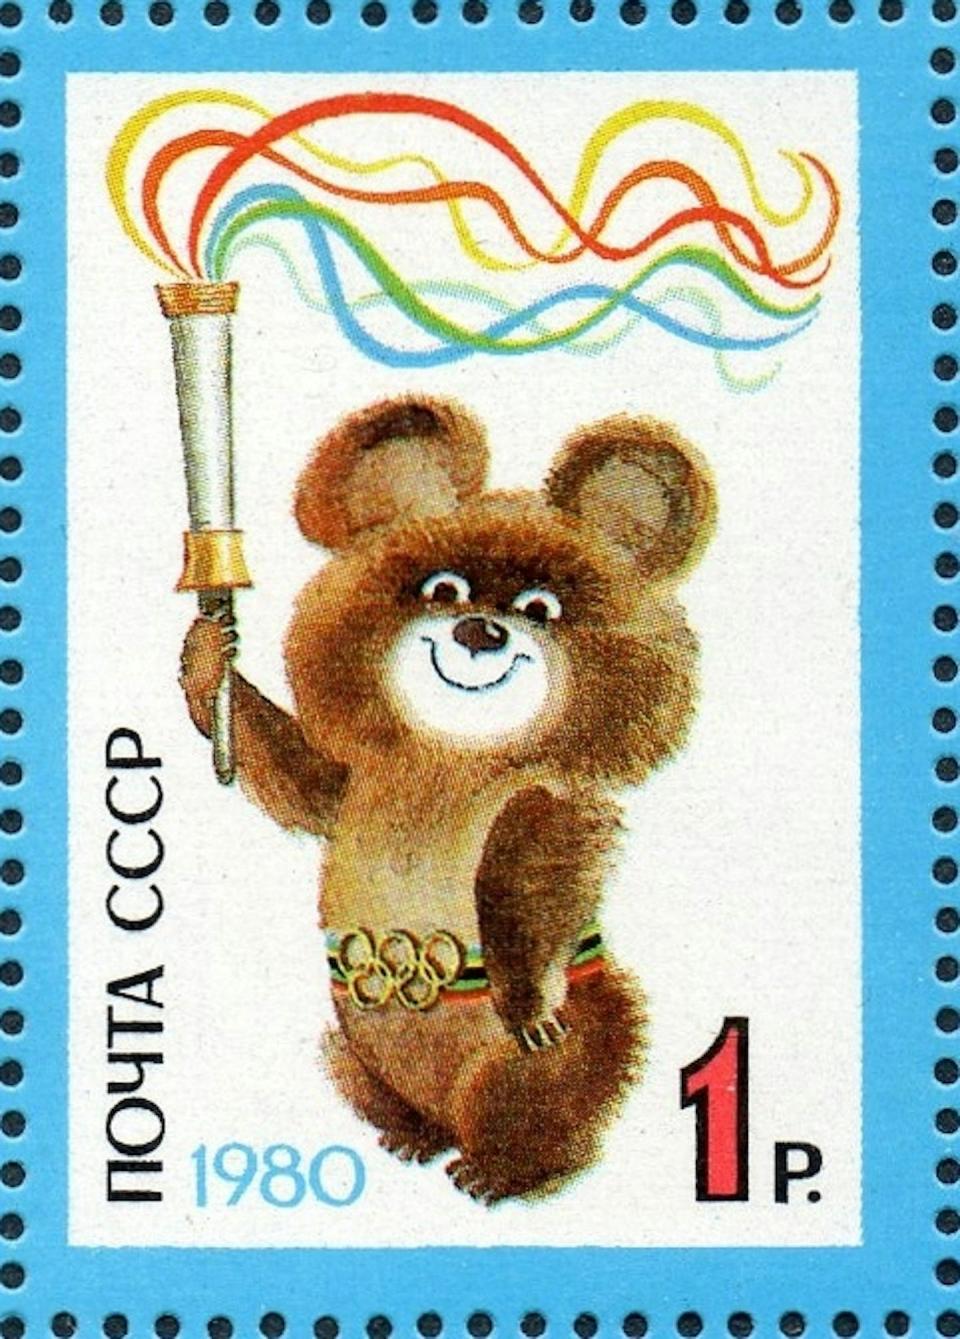 Sello soviético con Misha, mascota de los JJOO de 1980 en Moscú. <a href="https://commons.m.wikimedia.org/wiki/File:1980_USSR_stamp_Olympic_mascot.jpg" rel="nofollow noopener" target="_blank" data-ylk="slk:Wikimedia Commons / Ю.Левиновский;elm:context_link;itc:0;sec:content-canvas" class="link ">Wikimedia Commons / Ю.Левиновский</a>